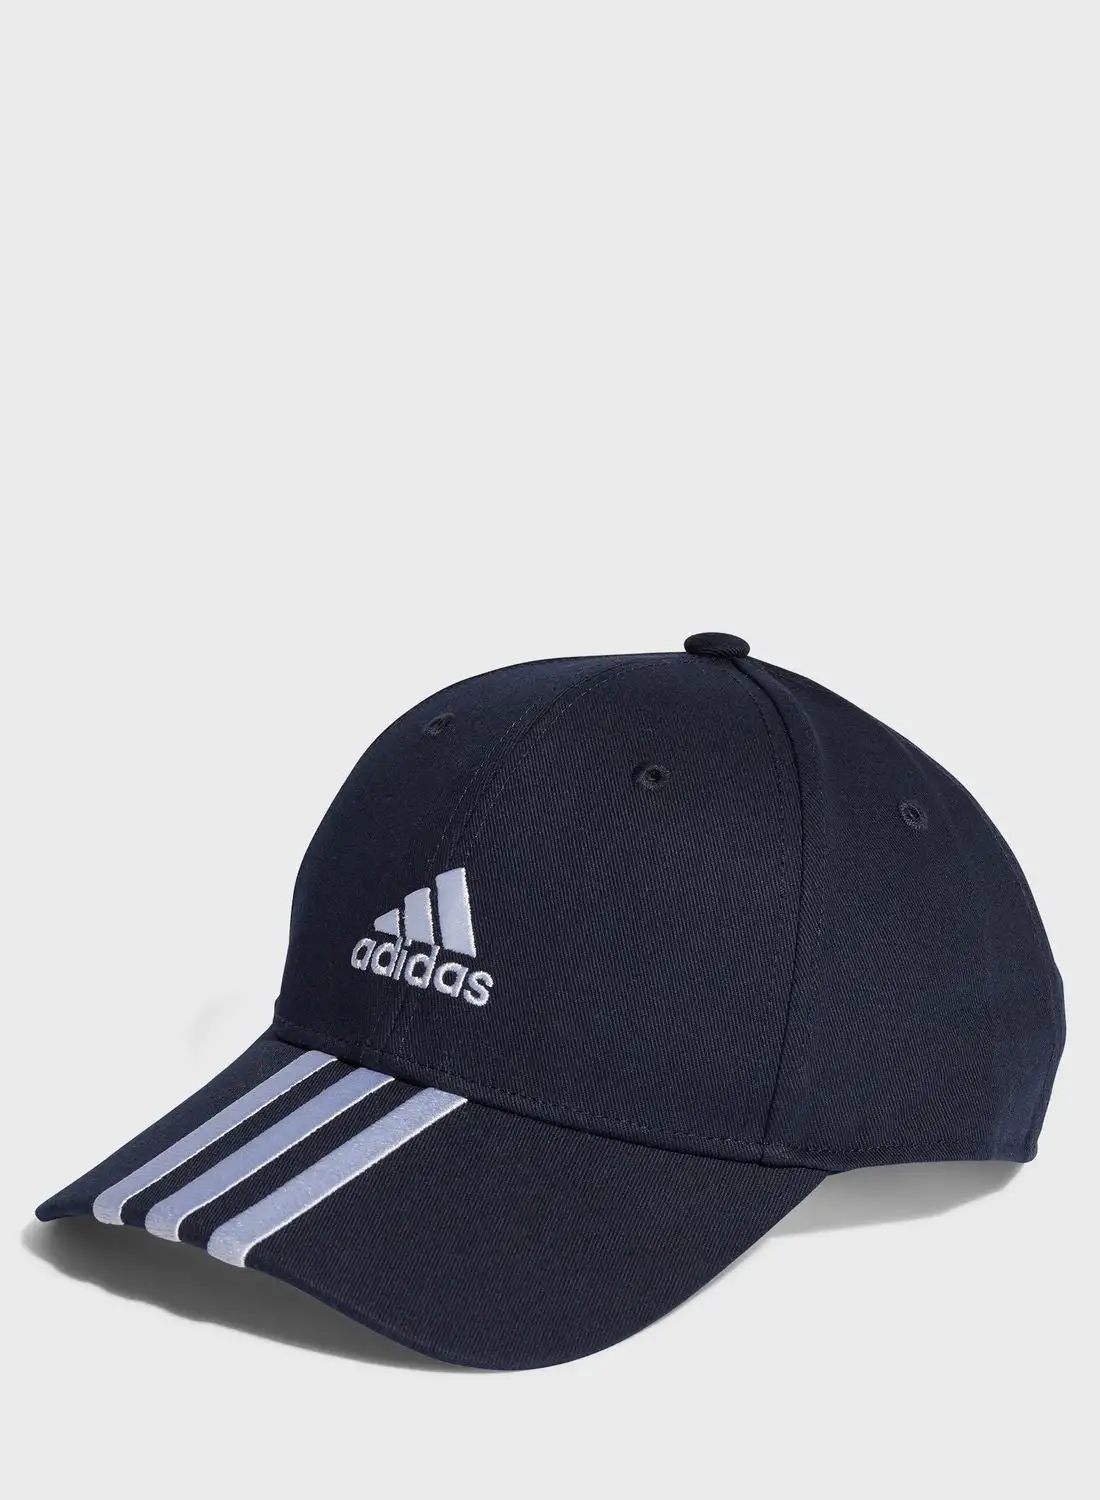 Adidas 3 Stripes Cotton Twill Baseball Cap